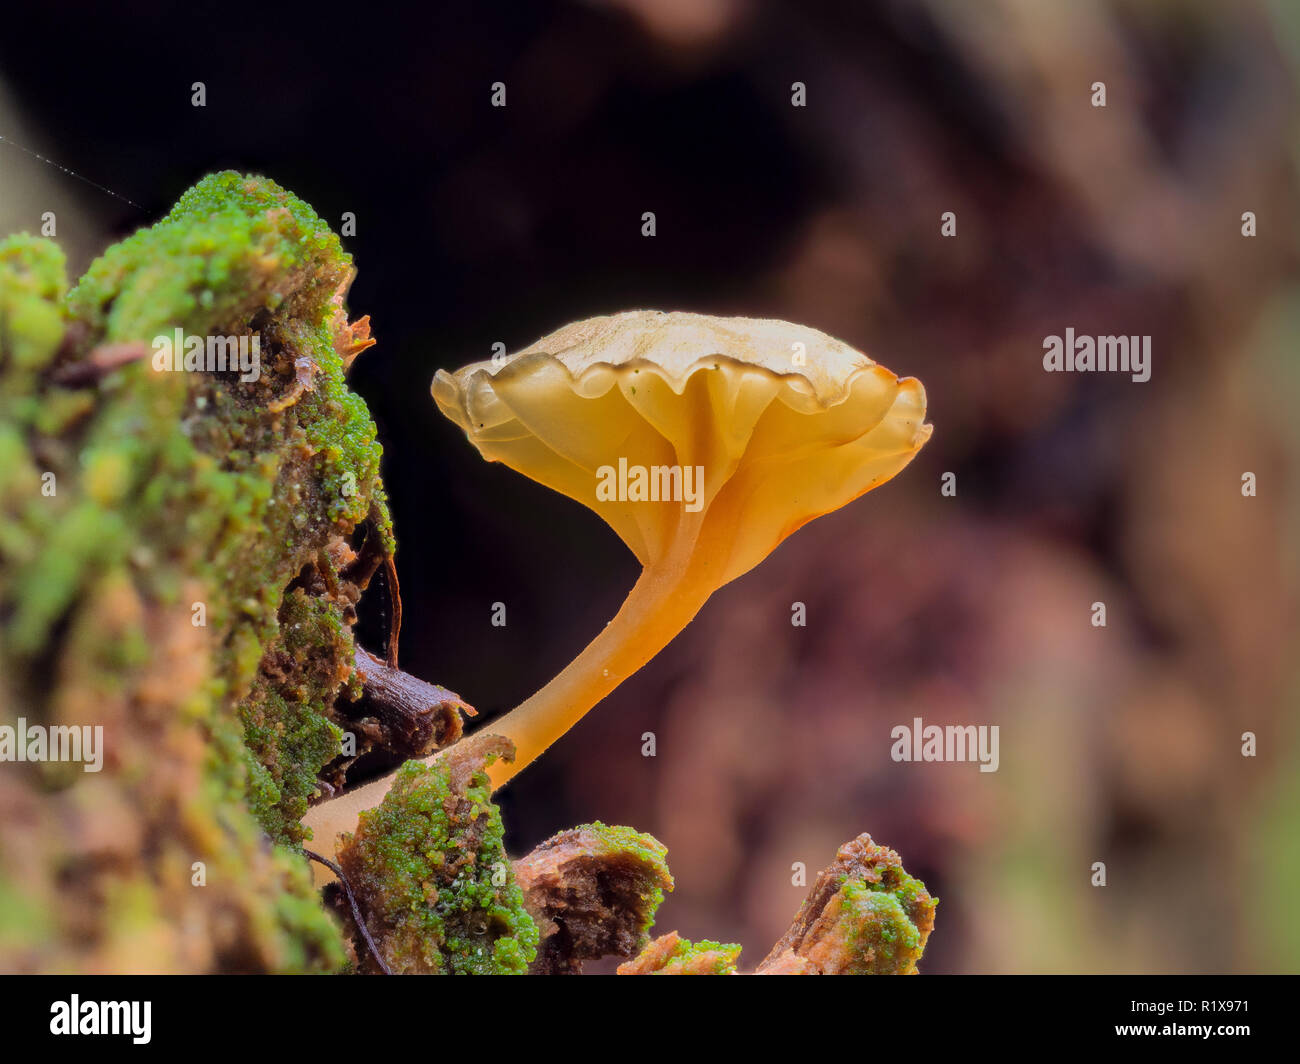 Tiny mushroom growing on a rotten tree log. Stock Photo